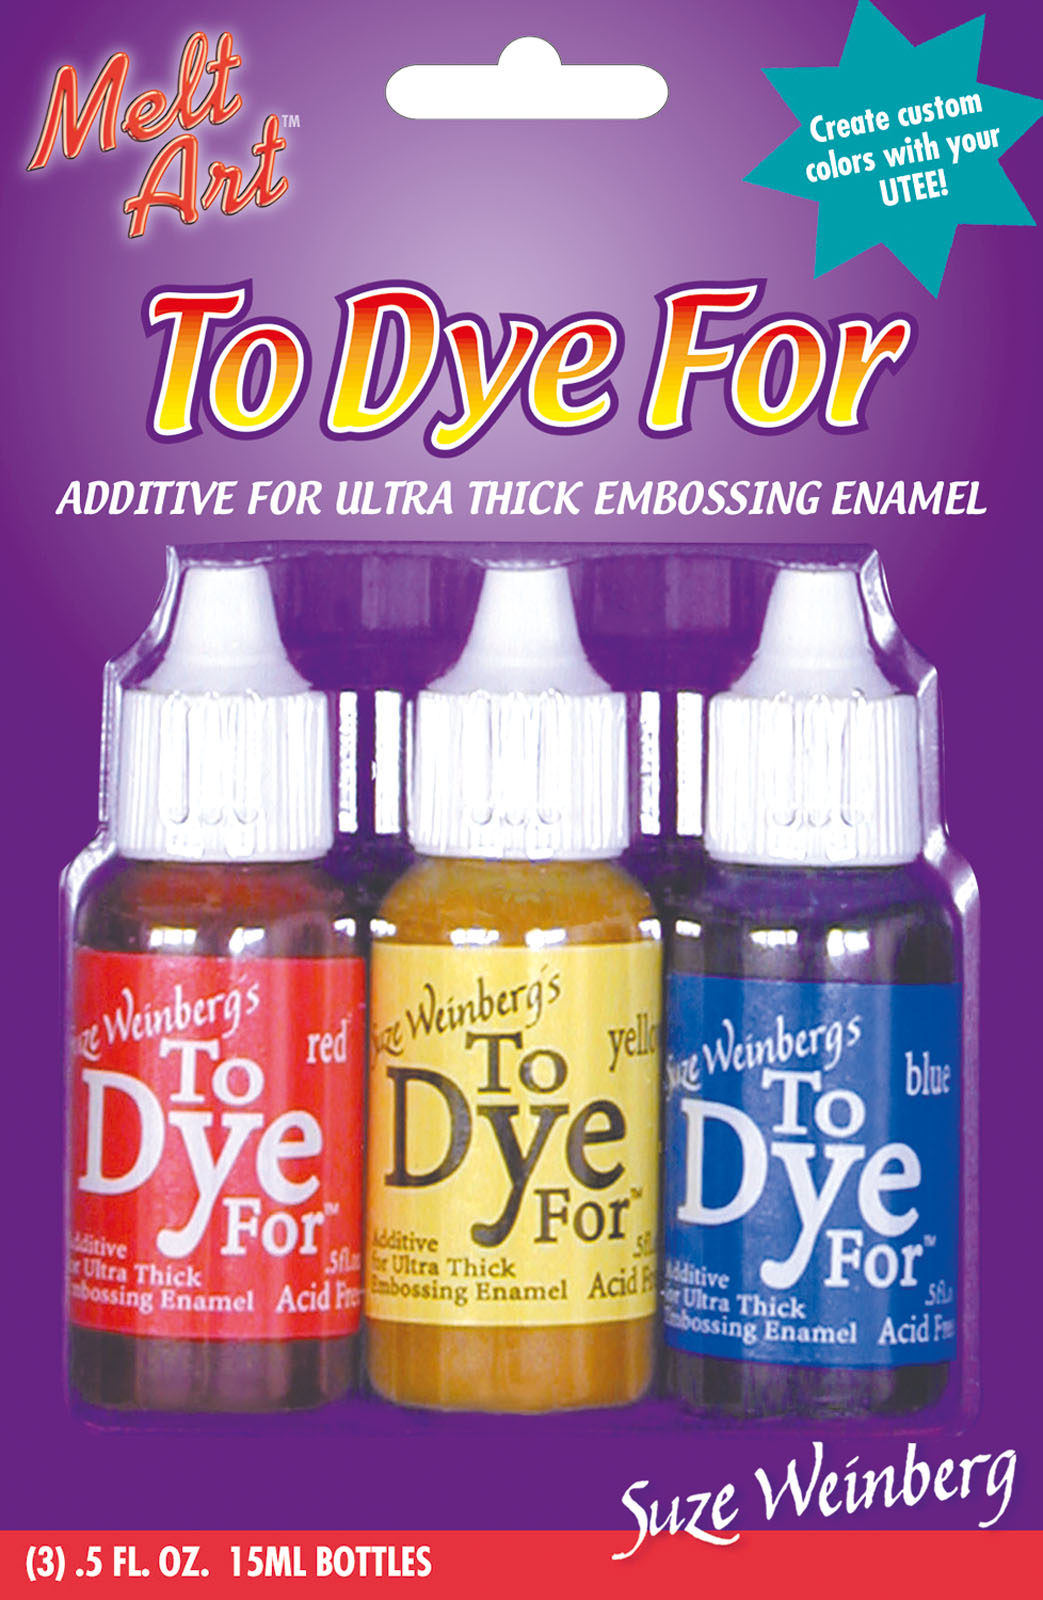 Melt art • To dye for Additive for Embossing Enamal Primary